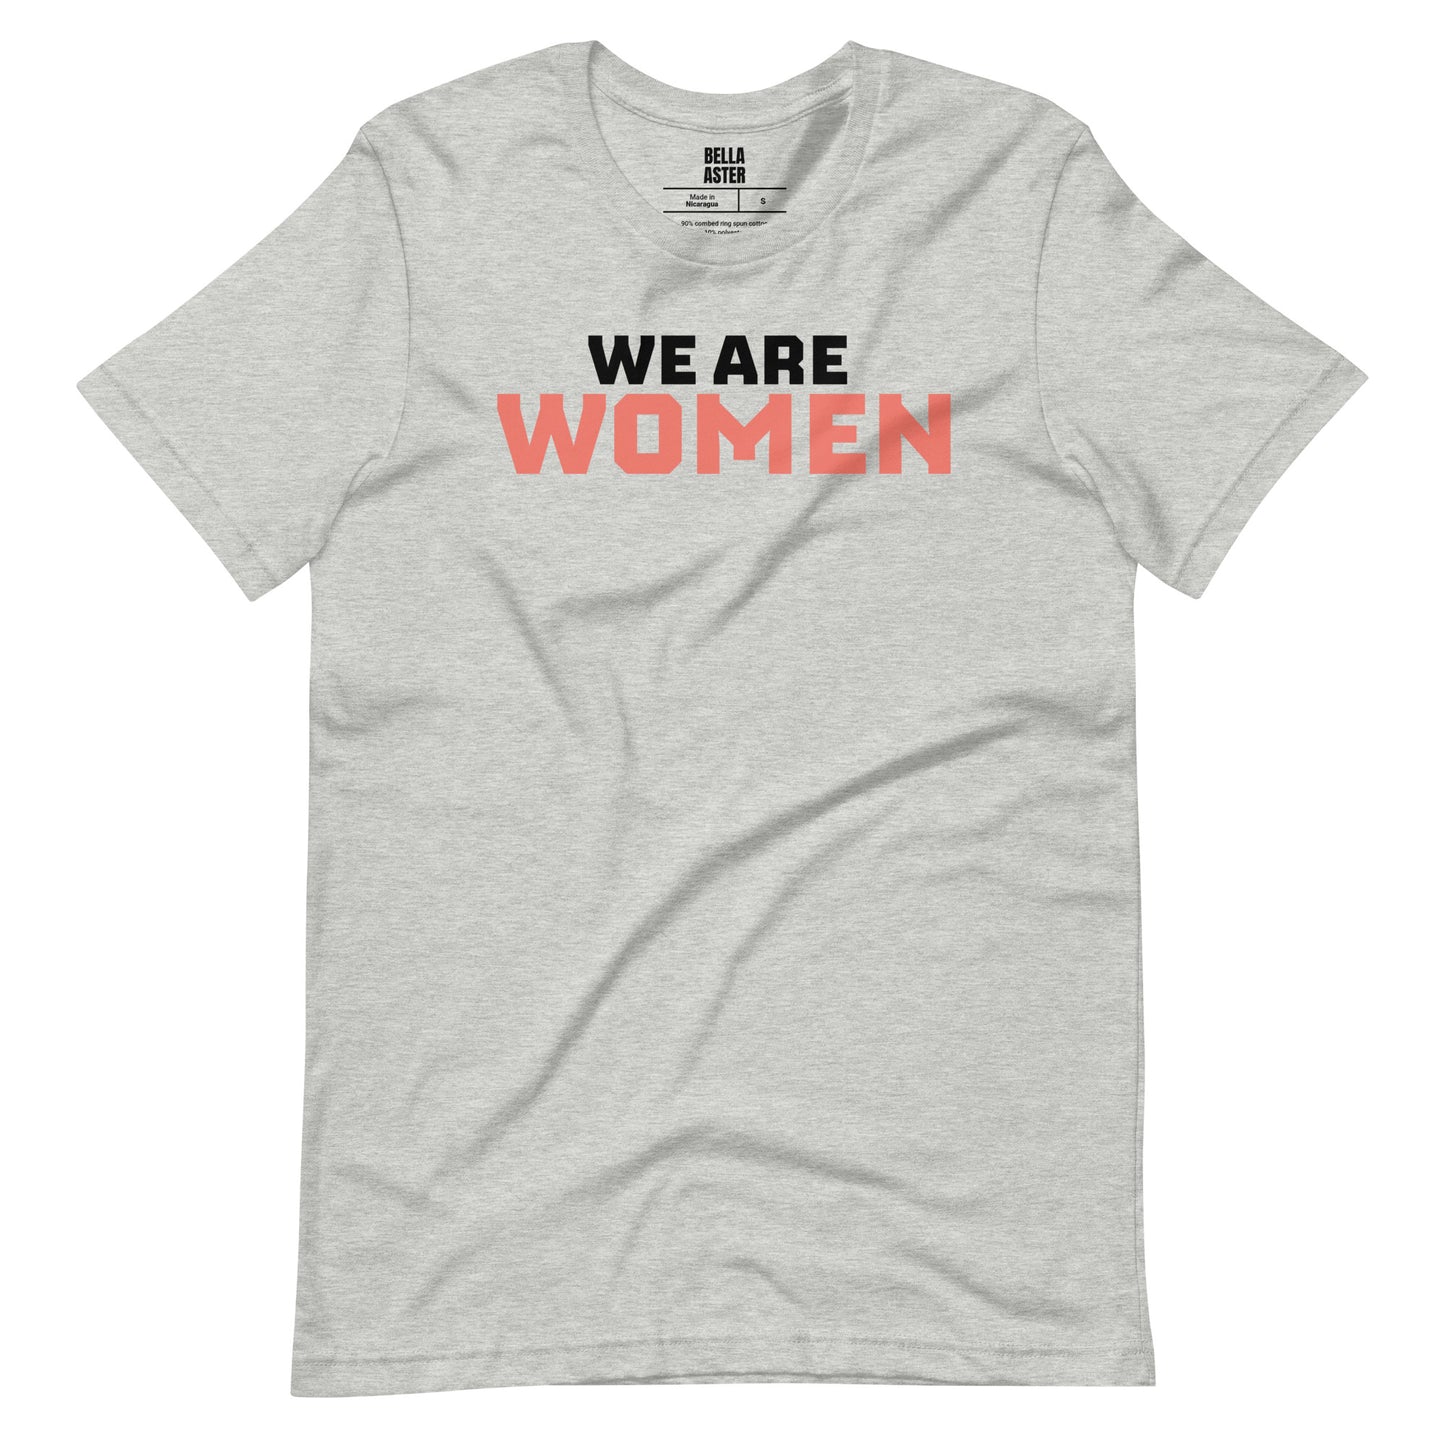 We Are Women Graphic Tee